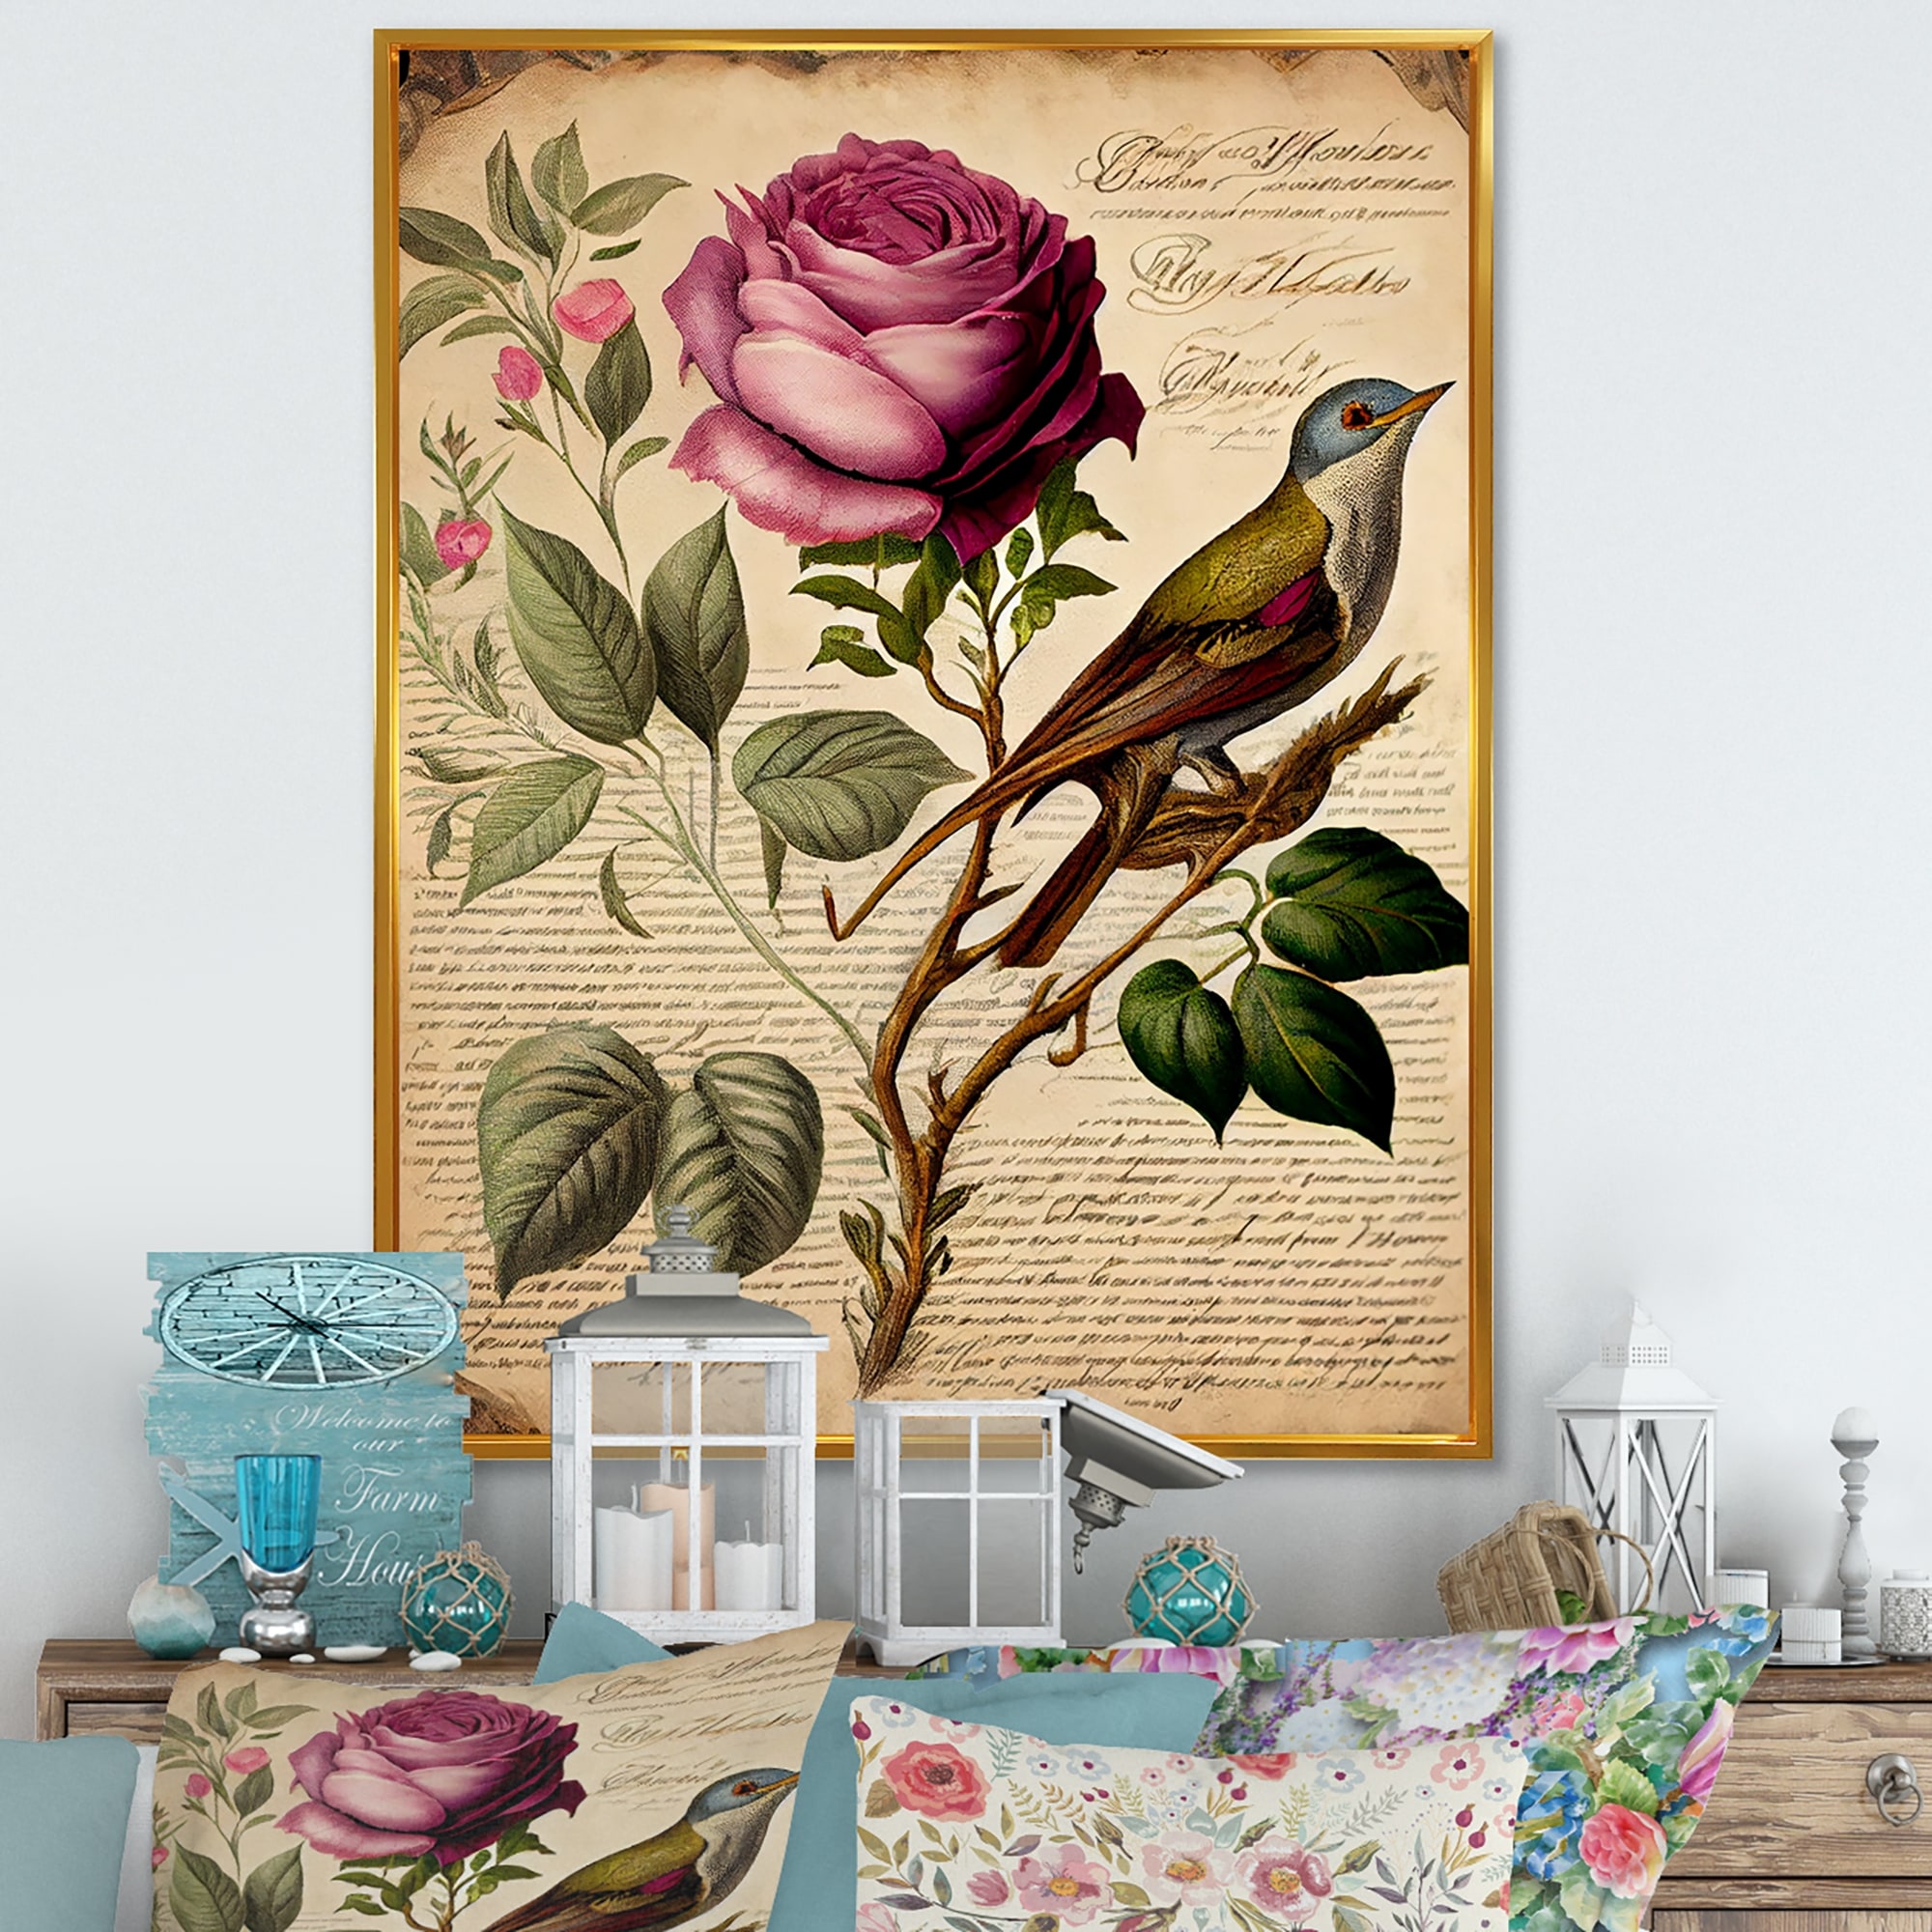 https://ak1.ostkcdn.com/images/products/is/images/direct/5daa1ebfb0acaecc23ad3a36be280f79264efd39/Designart-%22Victorian-Retro-Pink-Rose-IX%22-Floral-Rose-Framed-Canvas-Wall-Art-Print.jpg